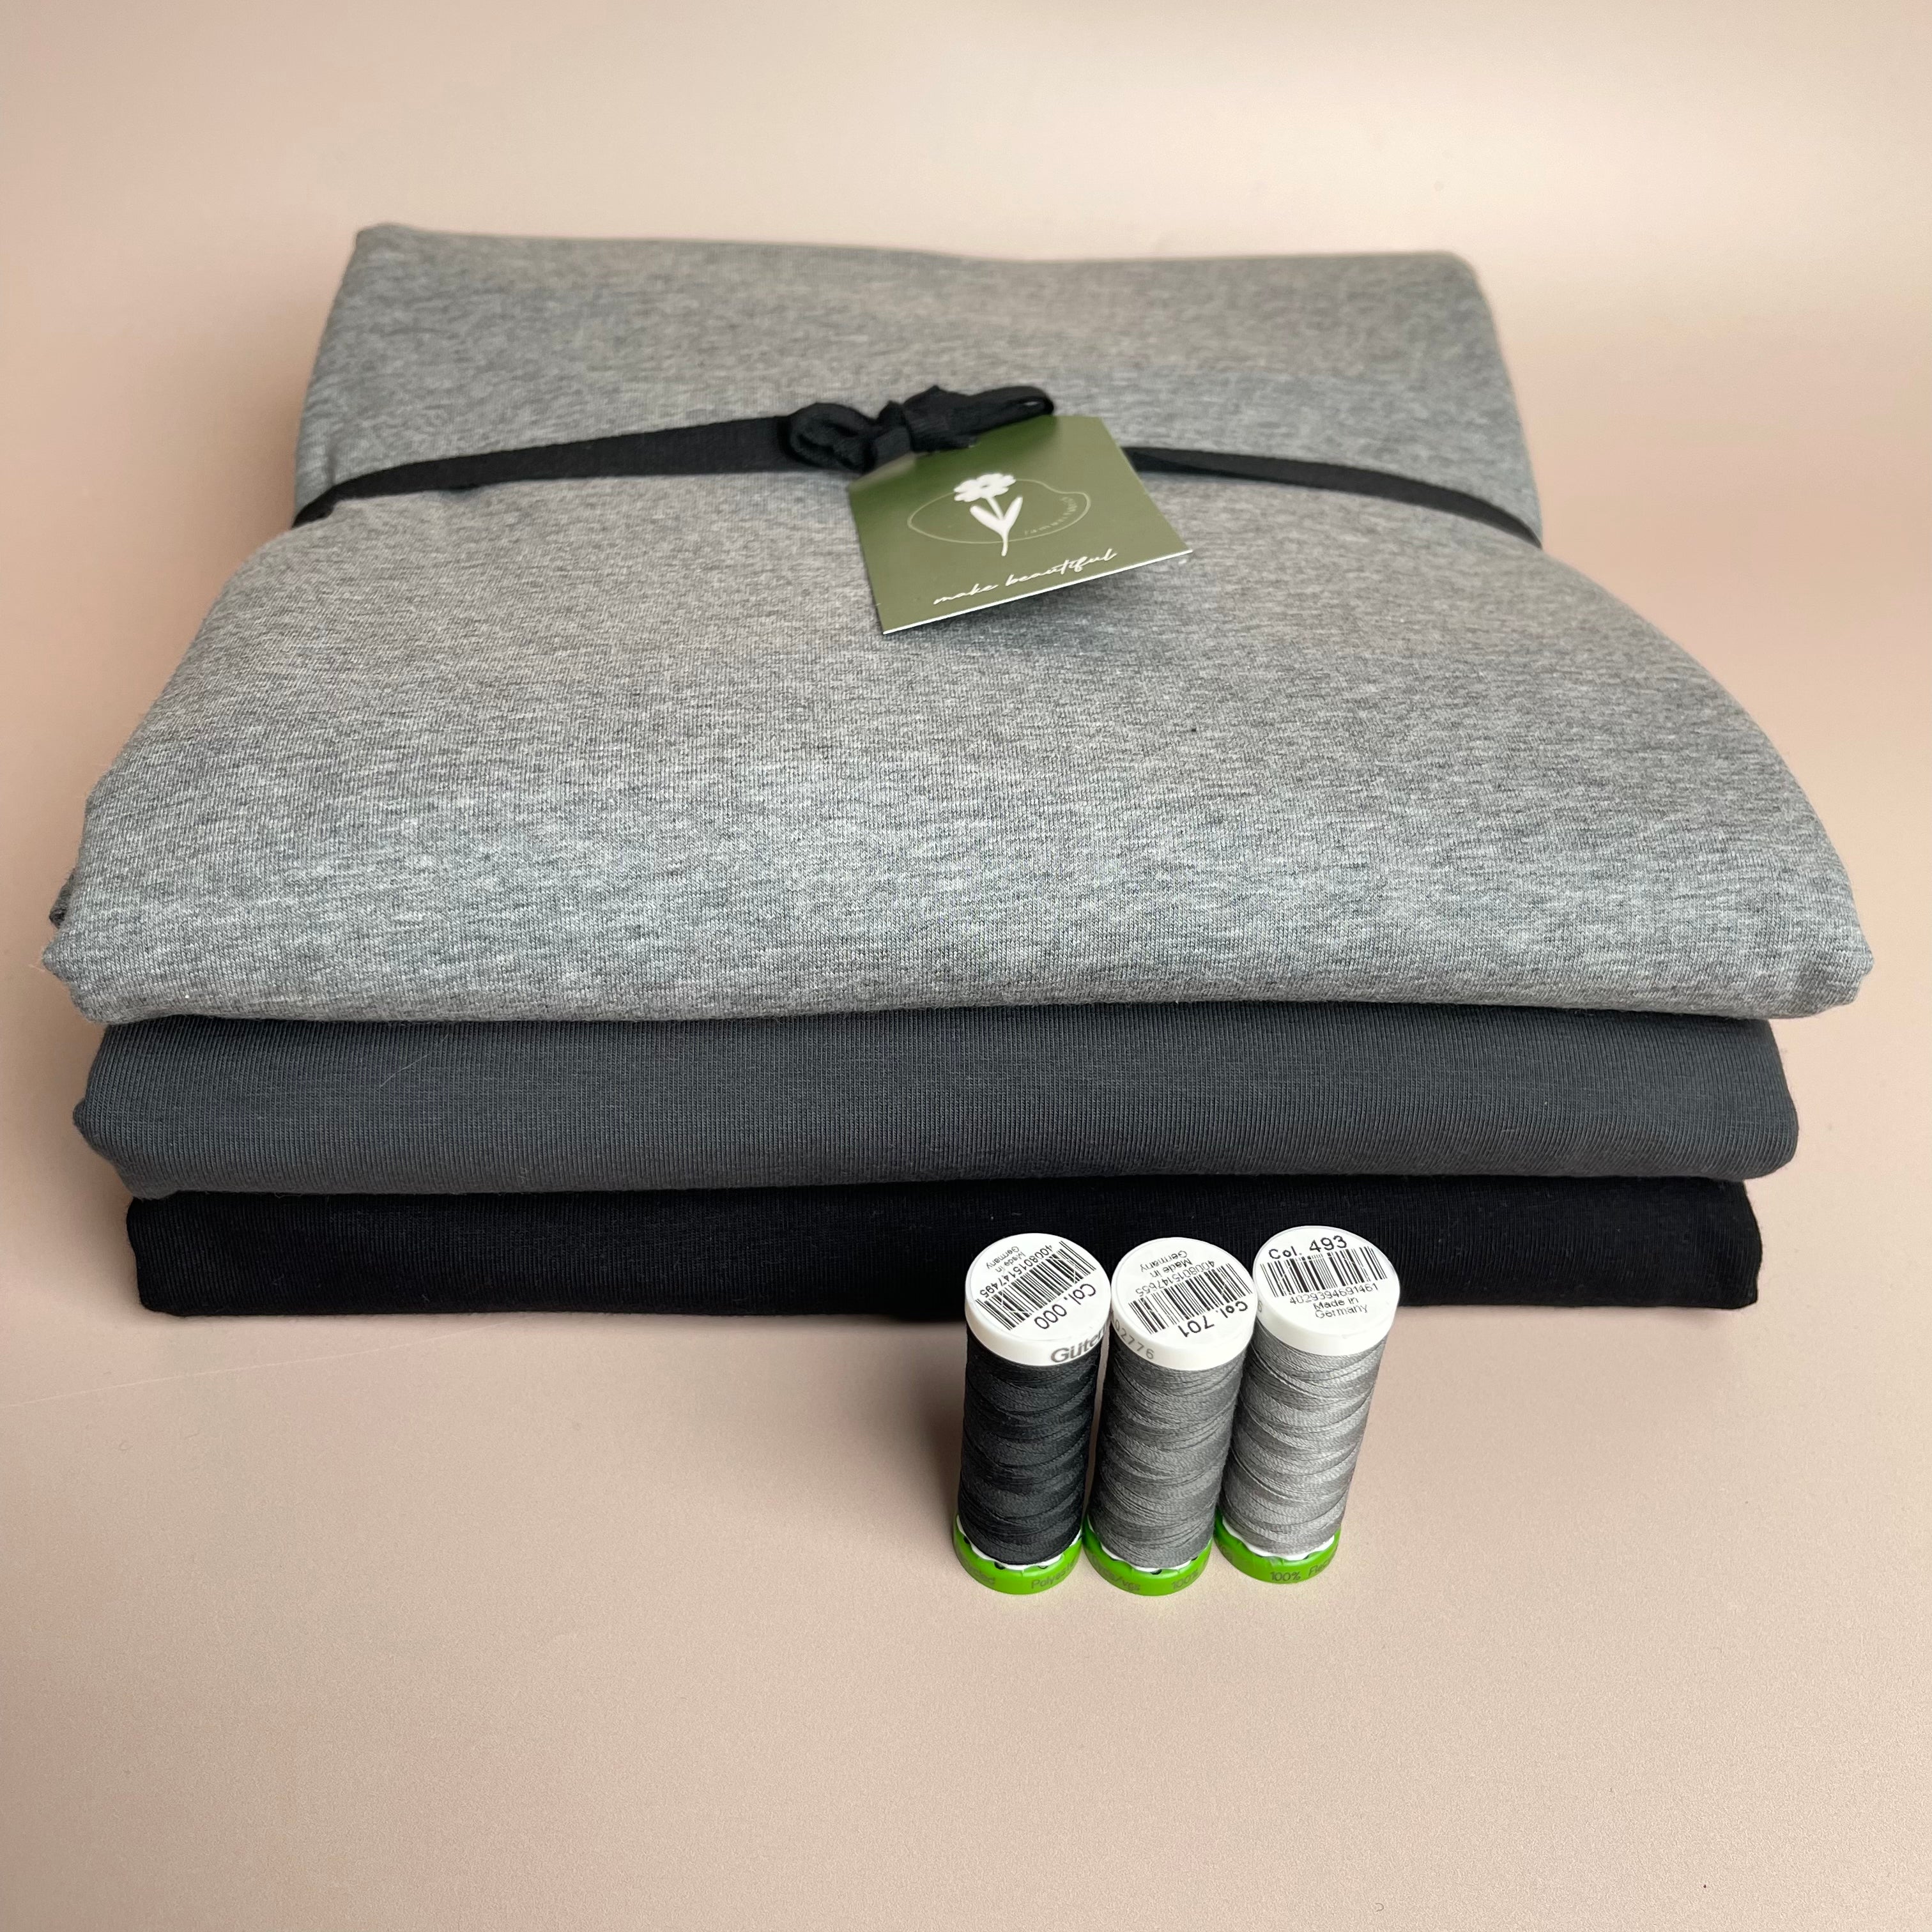 Colour Bundles - Neutrals Night Essential Chic Cotton Jersey Fabrics